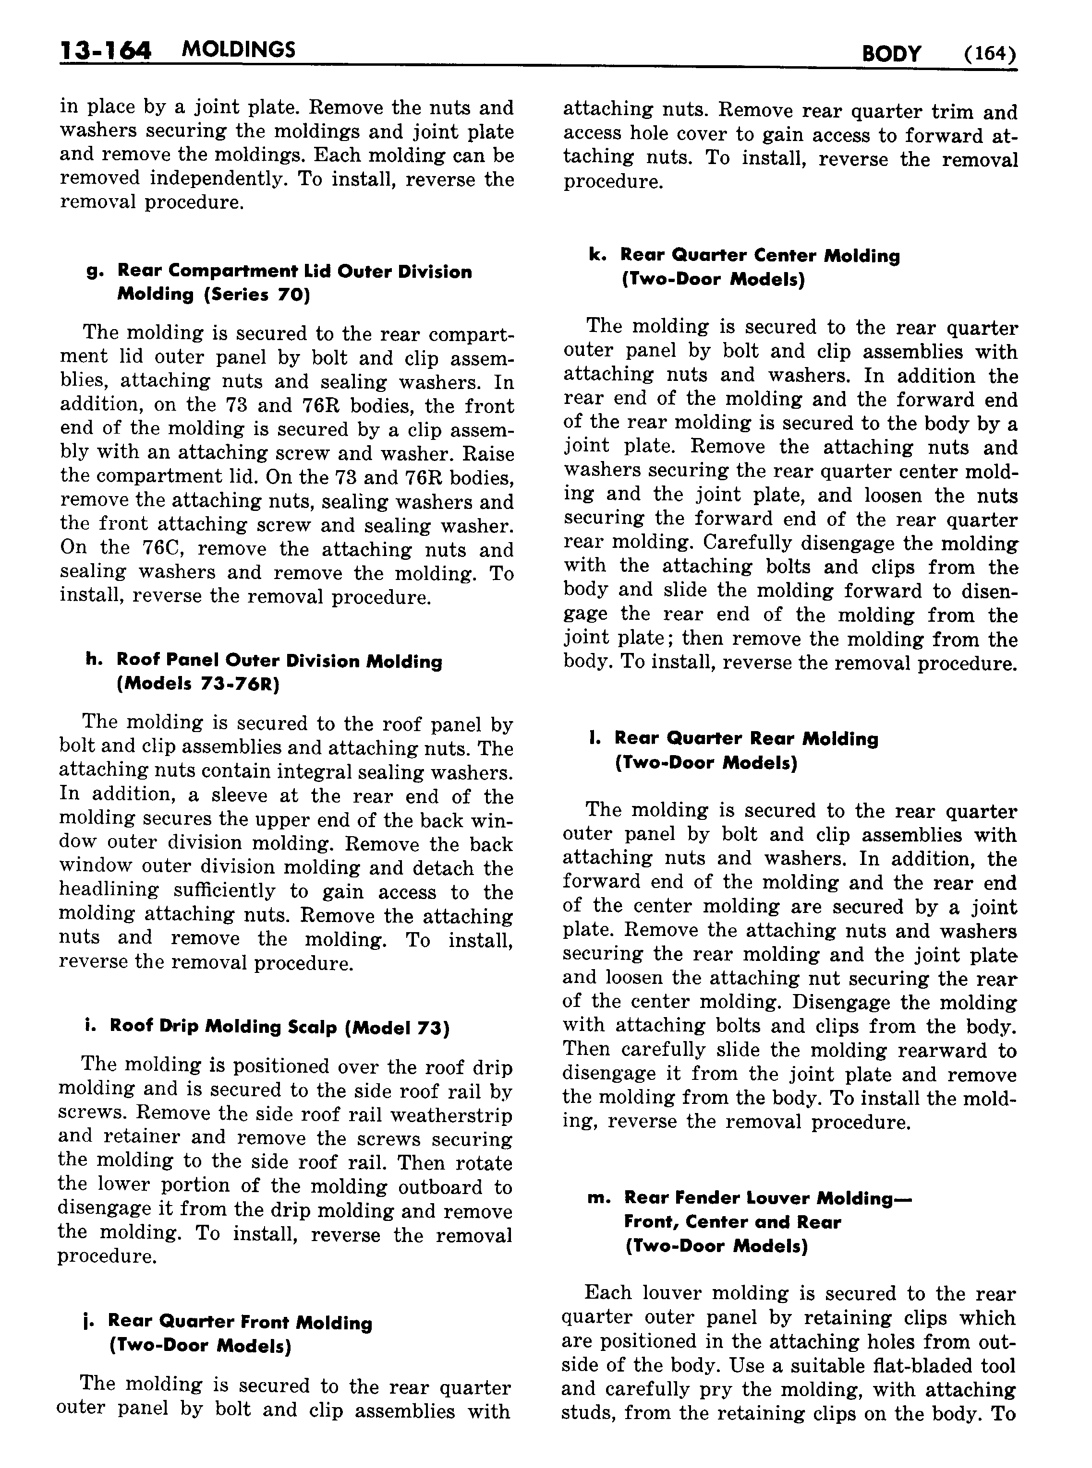 n_1957 Buick Body Service Manual-166-166.jpg